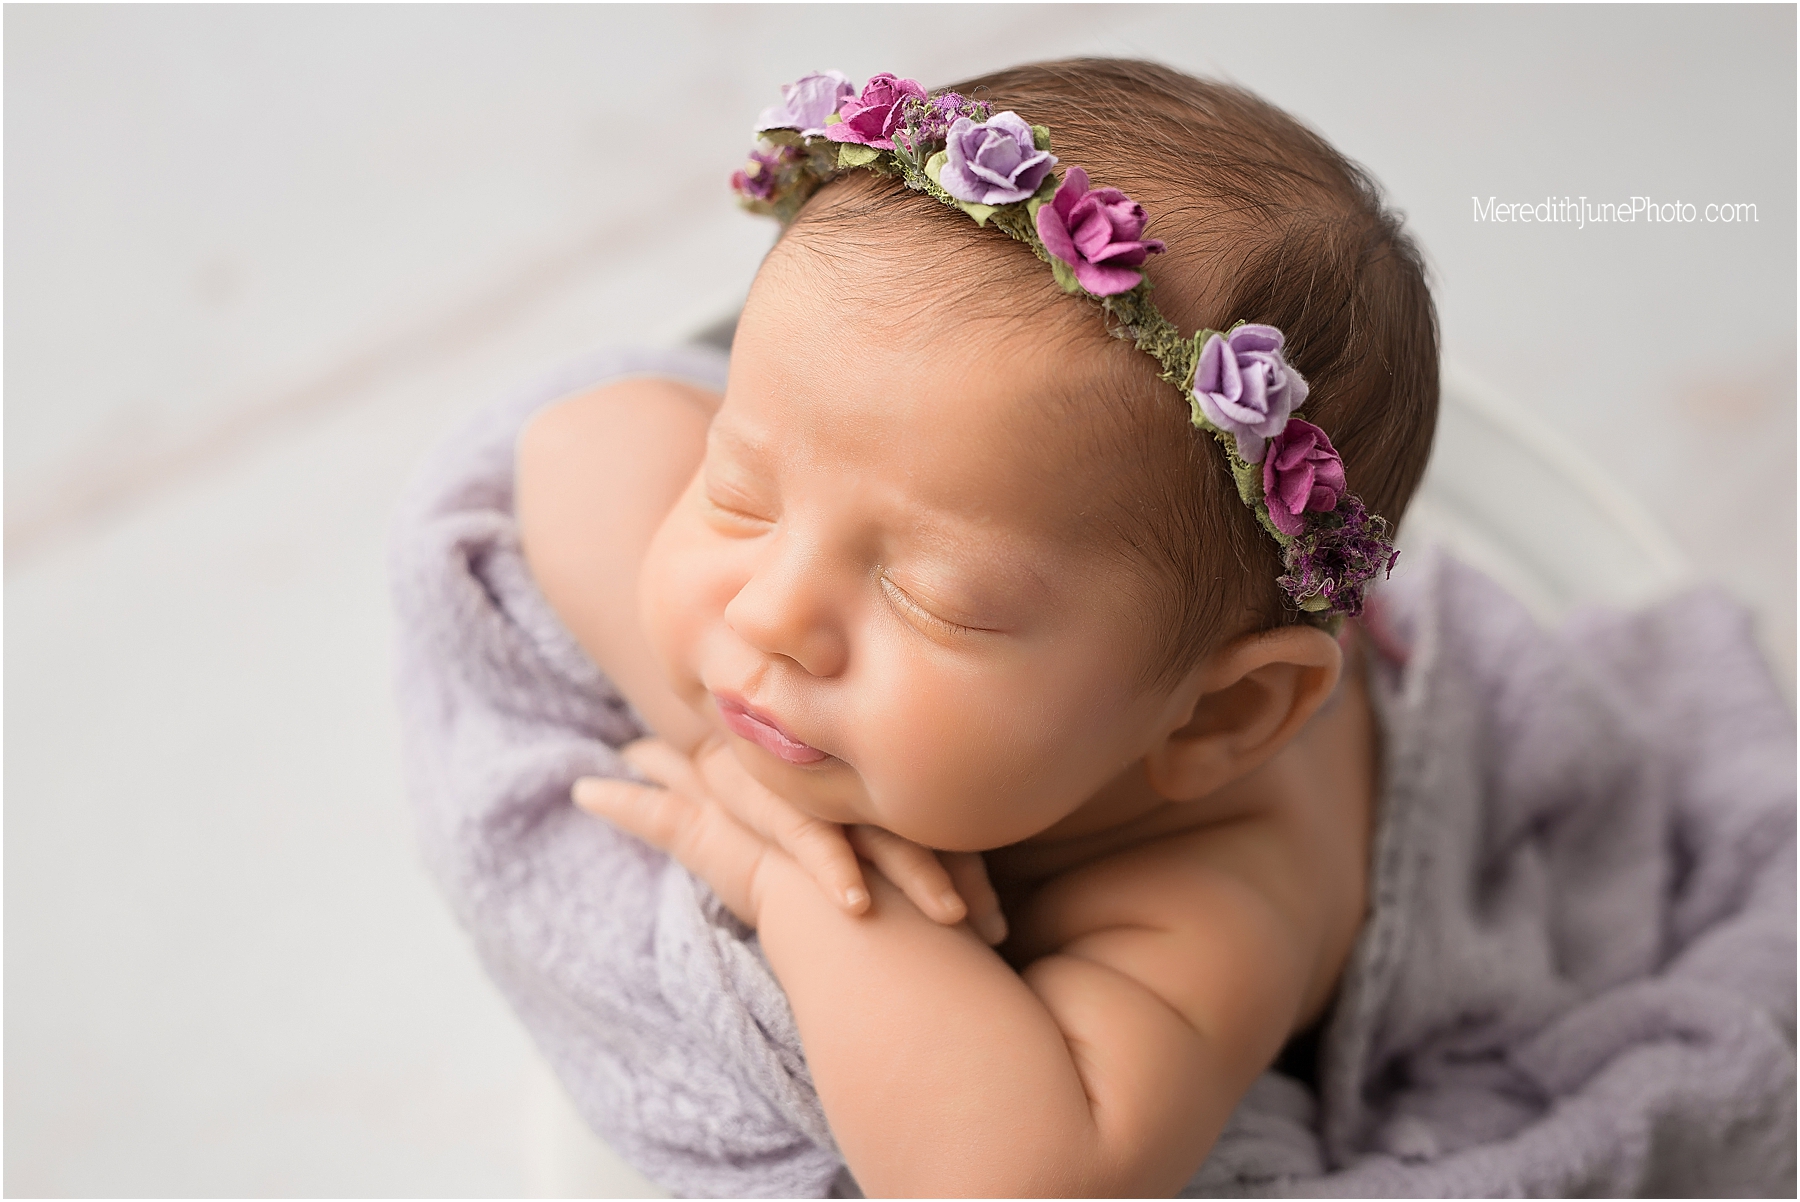 Newborn session for baby girl Mya